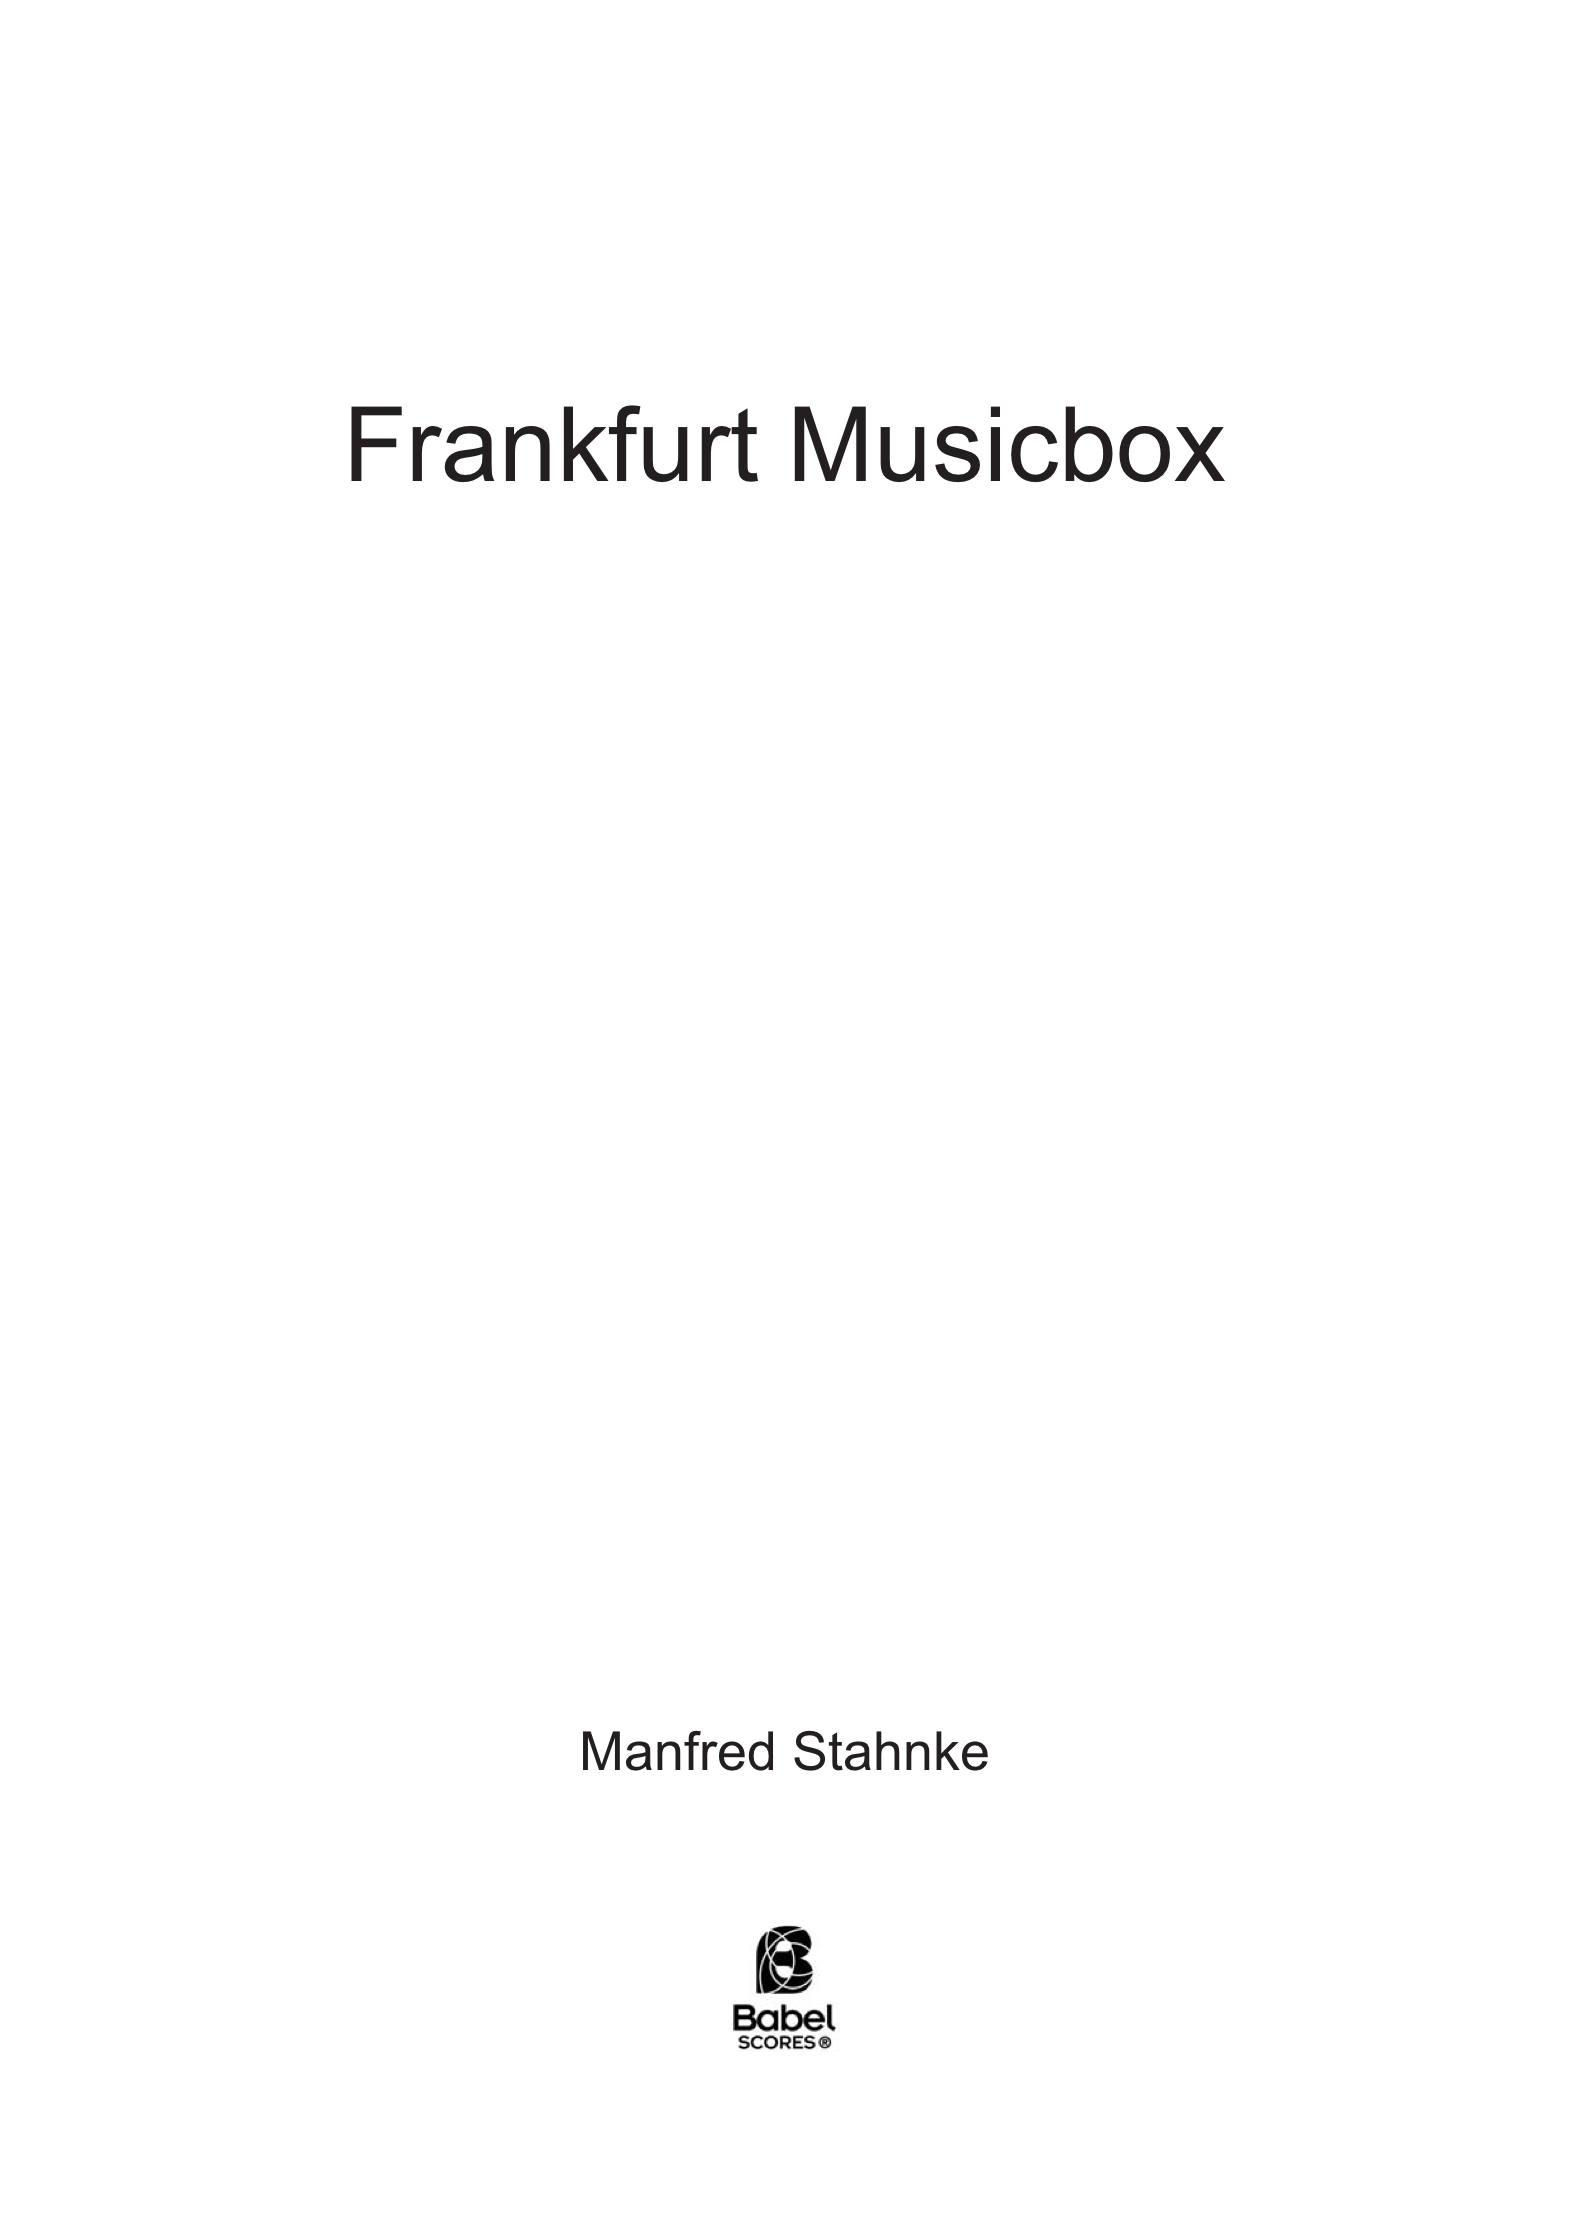 frankfurt musicbox A4 z 2 280 1 425